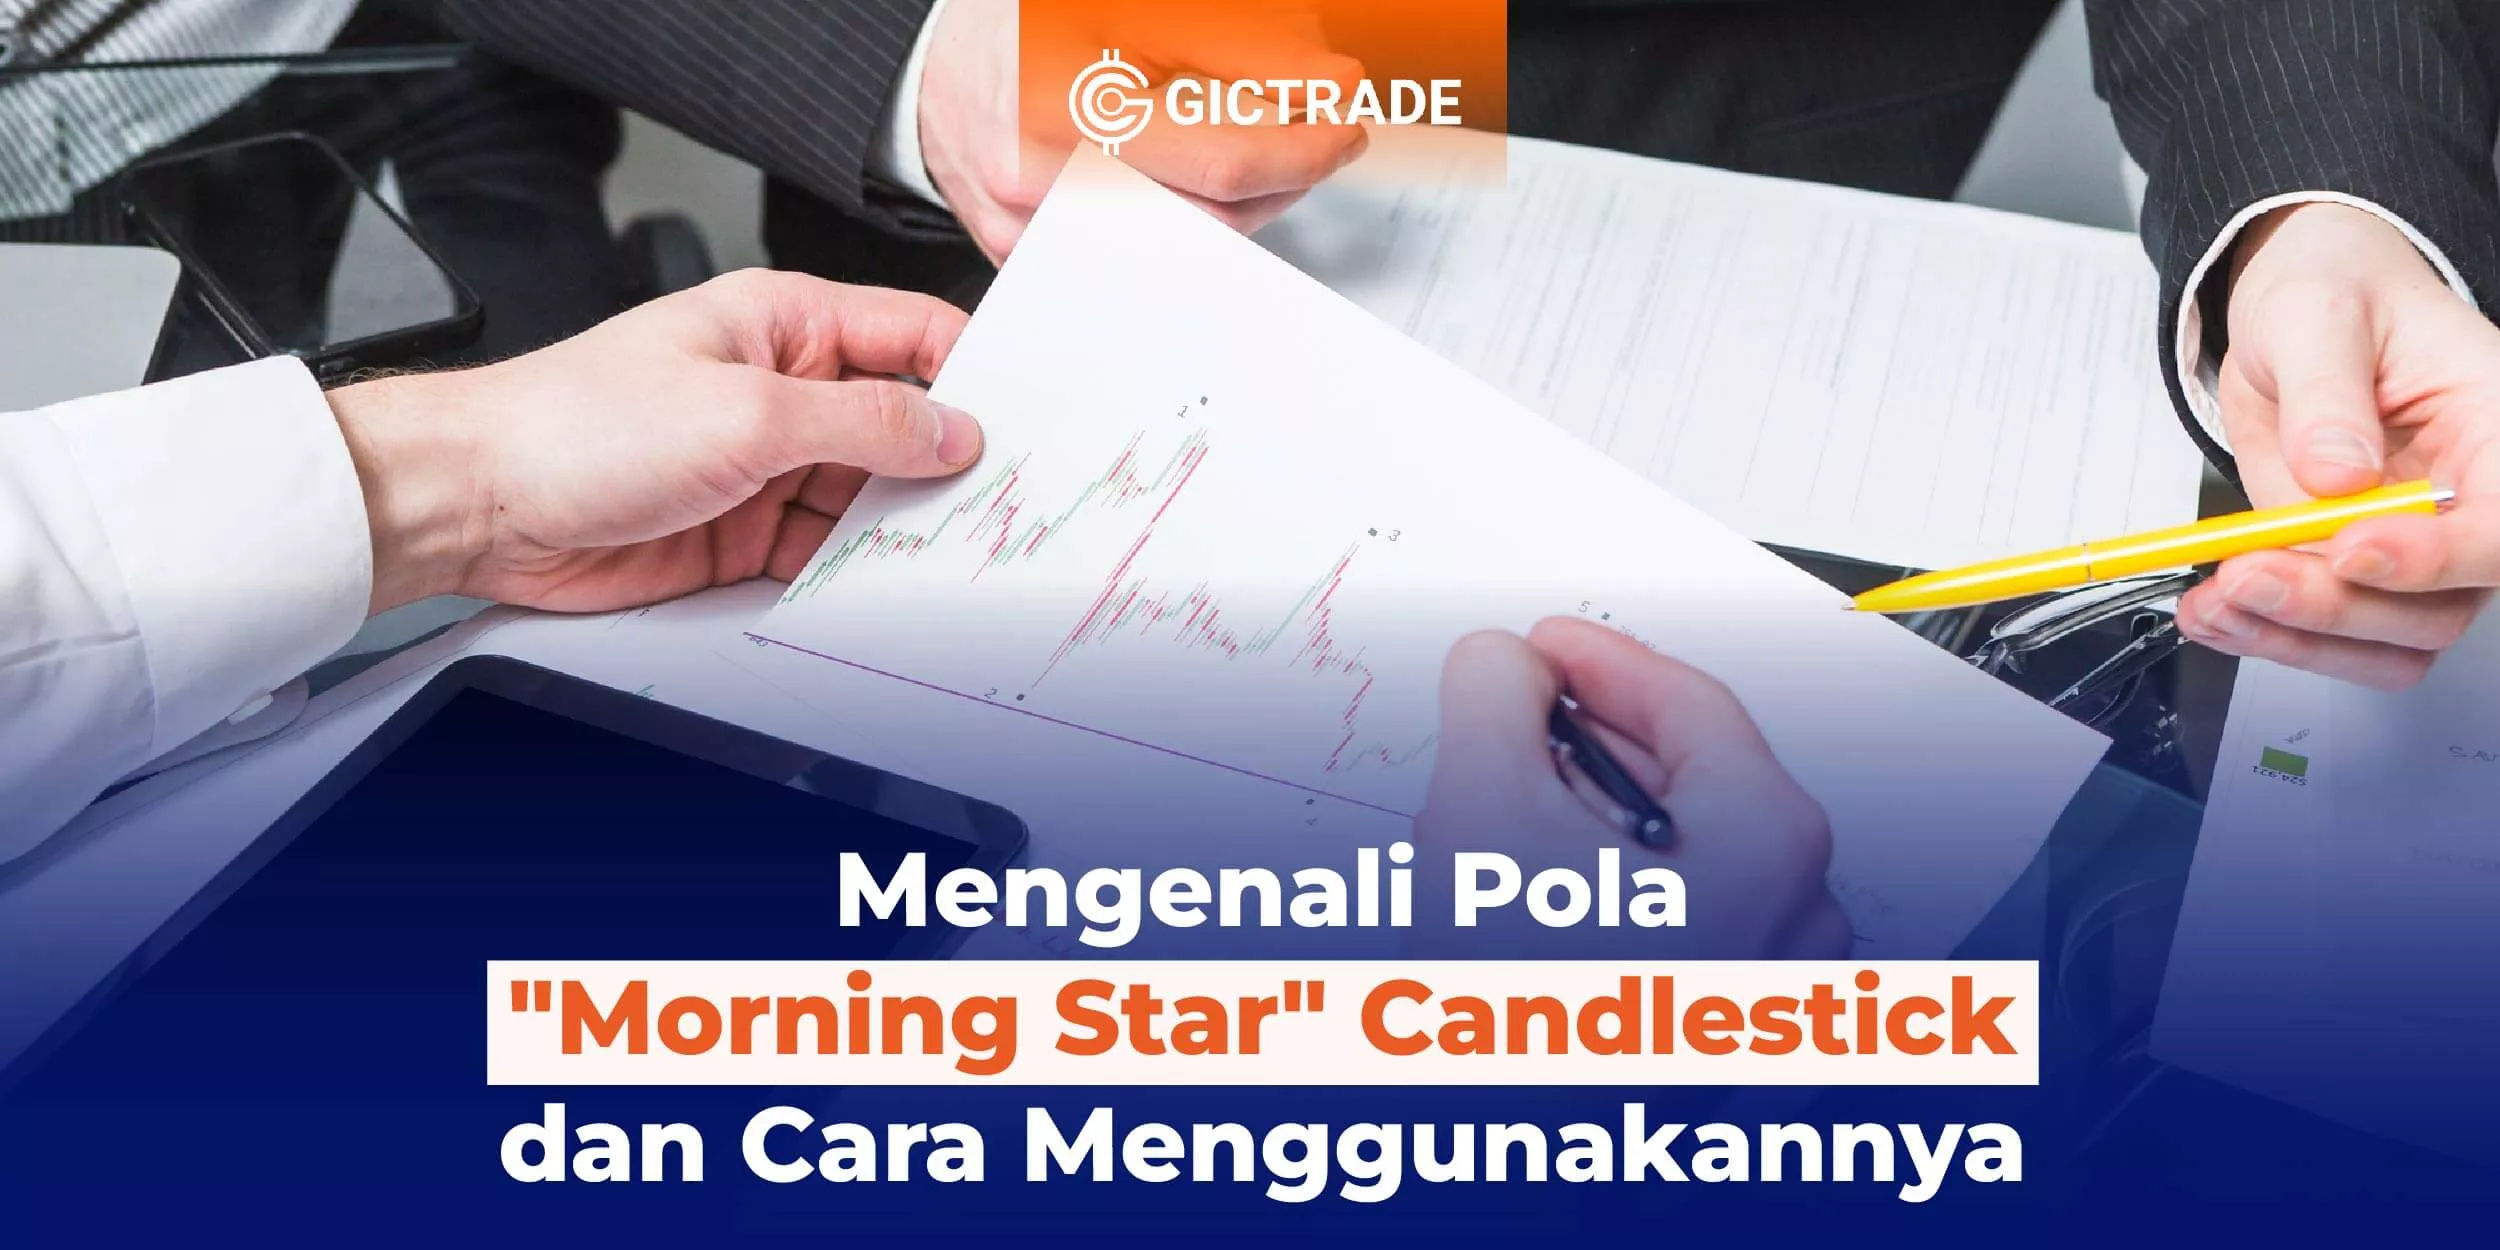 Mengenali Pola Morning Star Candlestick